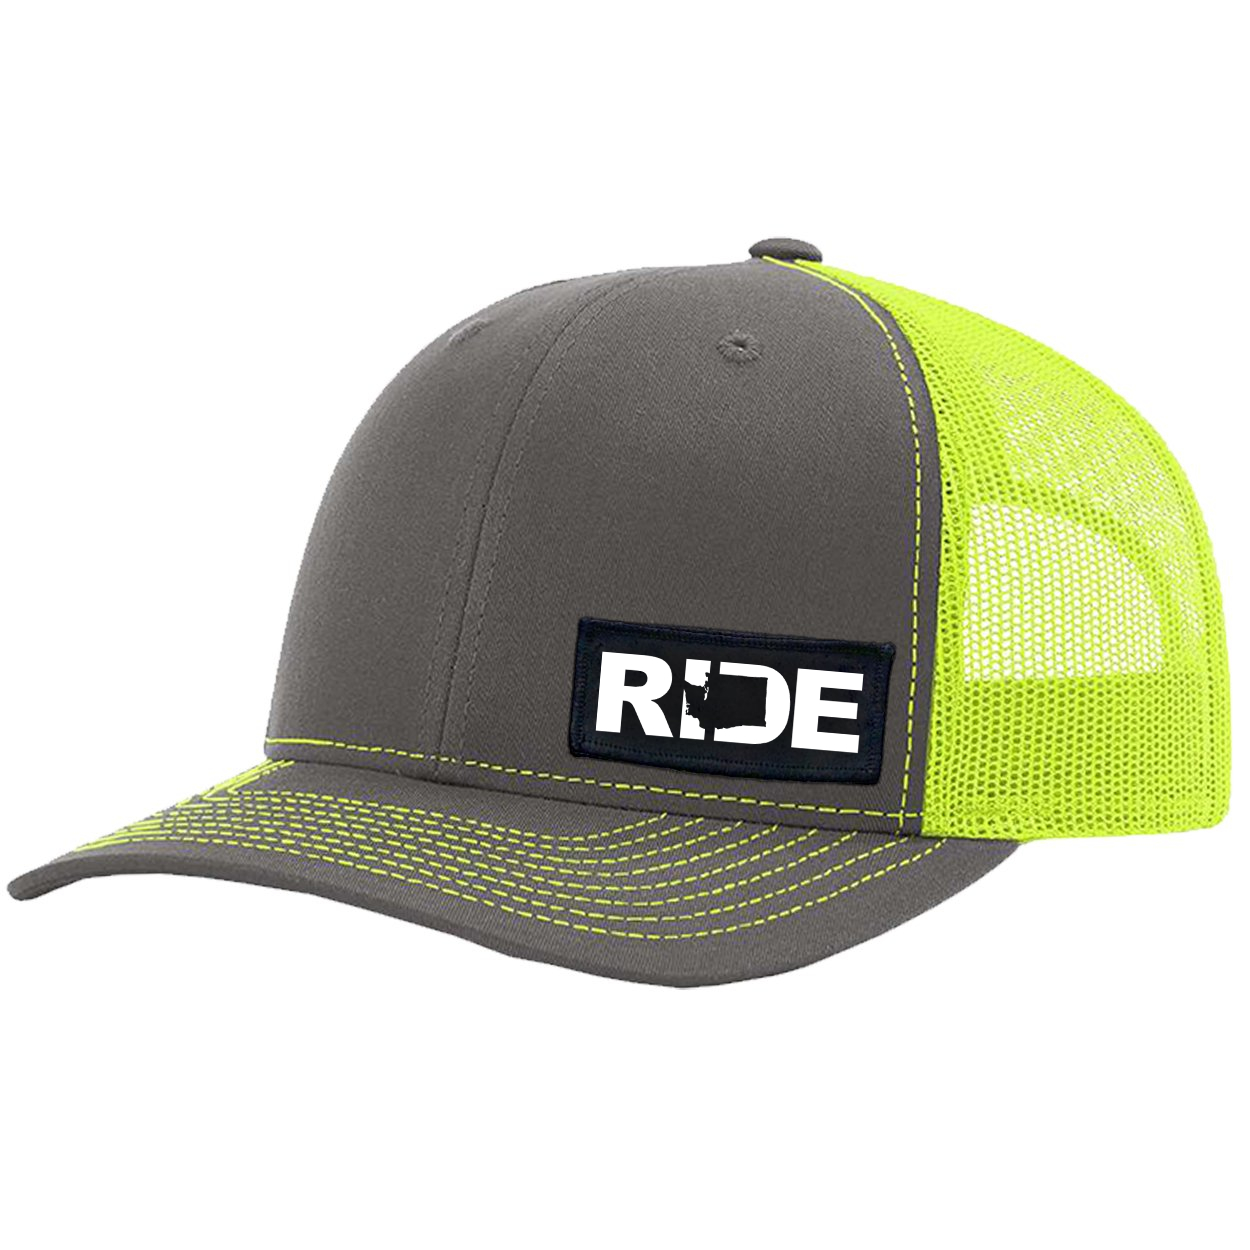 Ride Washington Night Out Woven Patch Snapback Trucker Hat Charcoal/Neon Yellow (White Logo)